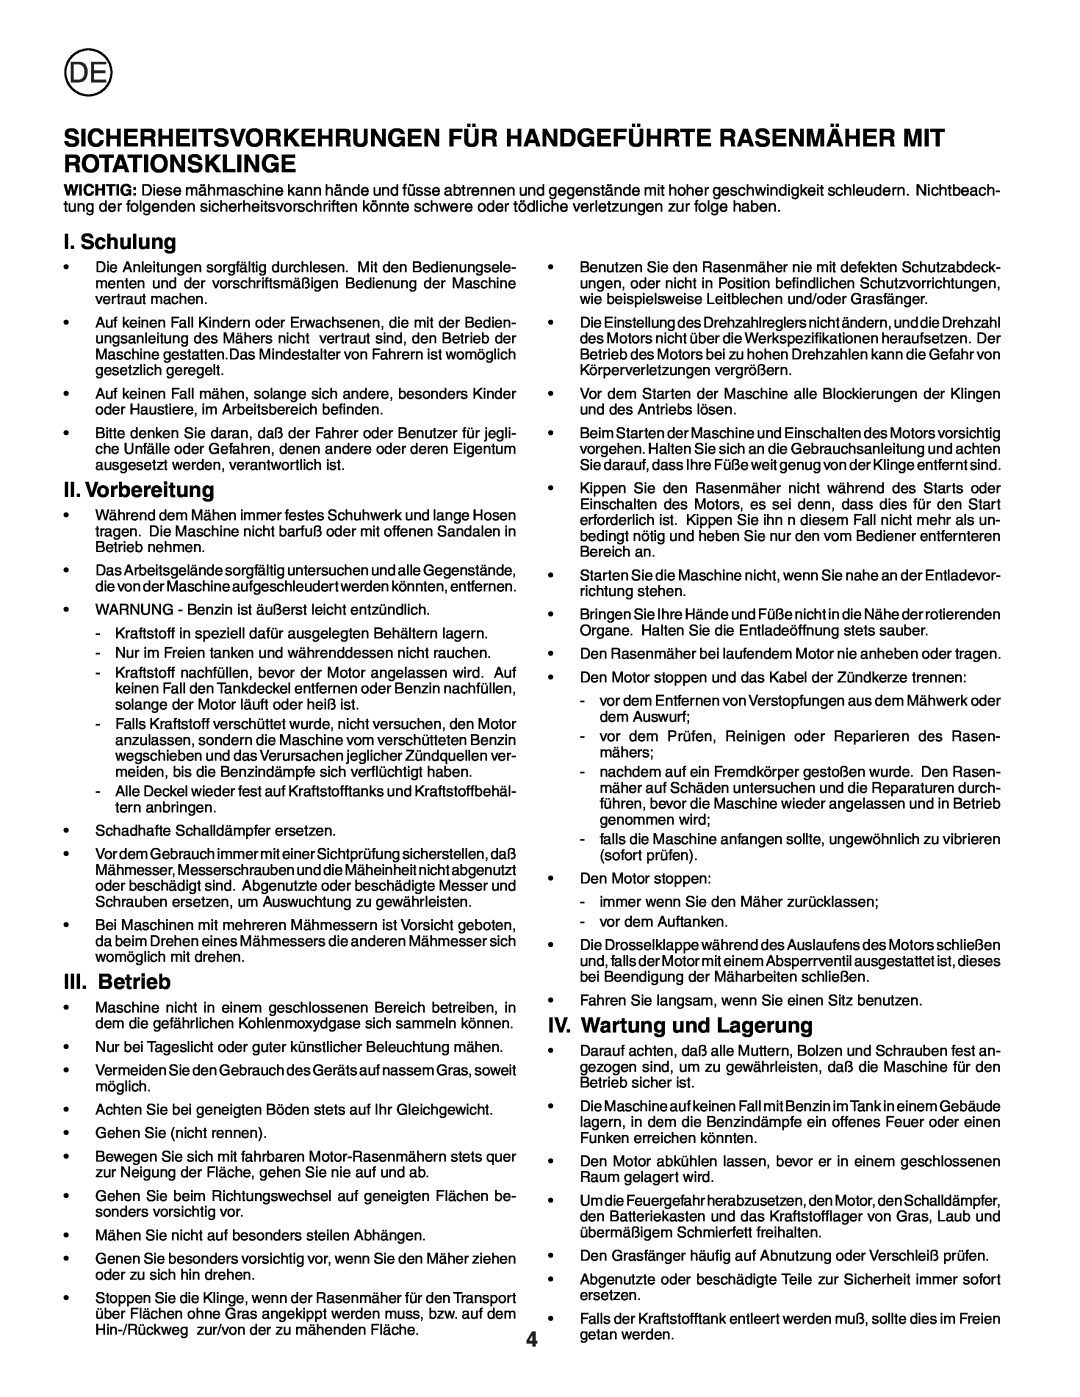 Husqvarna R53W instruction manual I. Schulung, II. Vorbereitung, III. Betrieb, IV. Wartung und Lagerung 